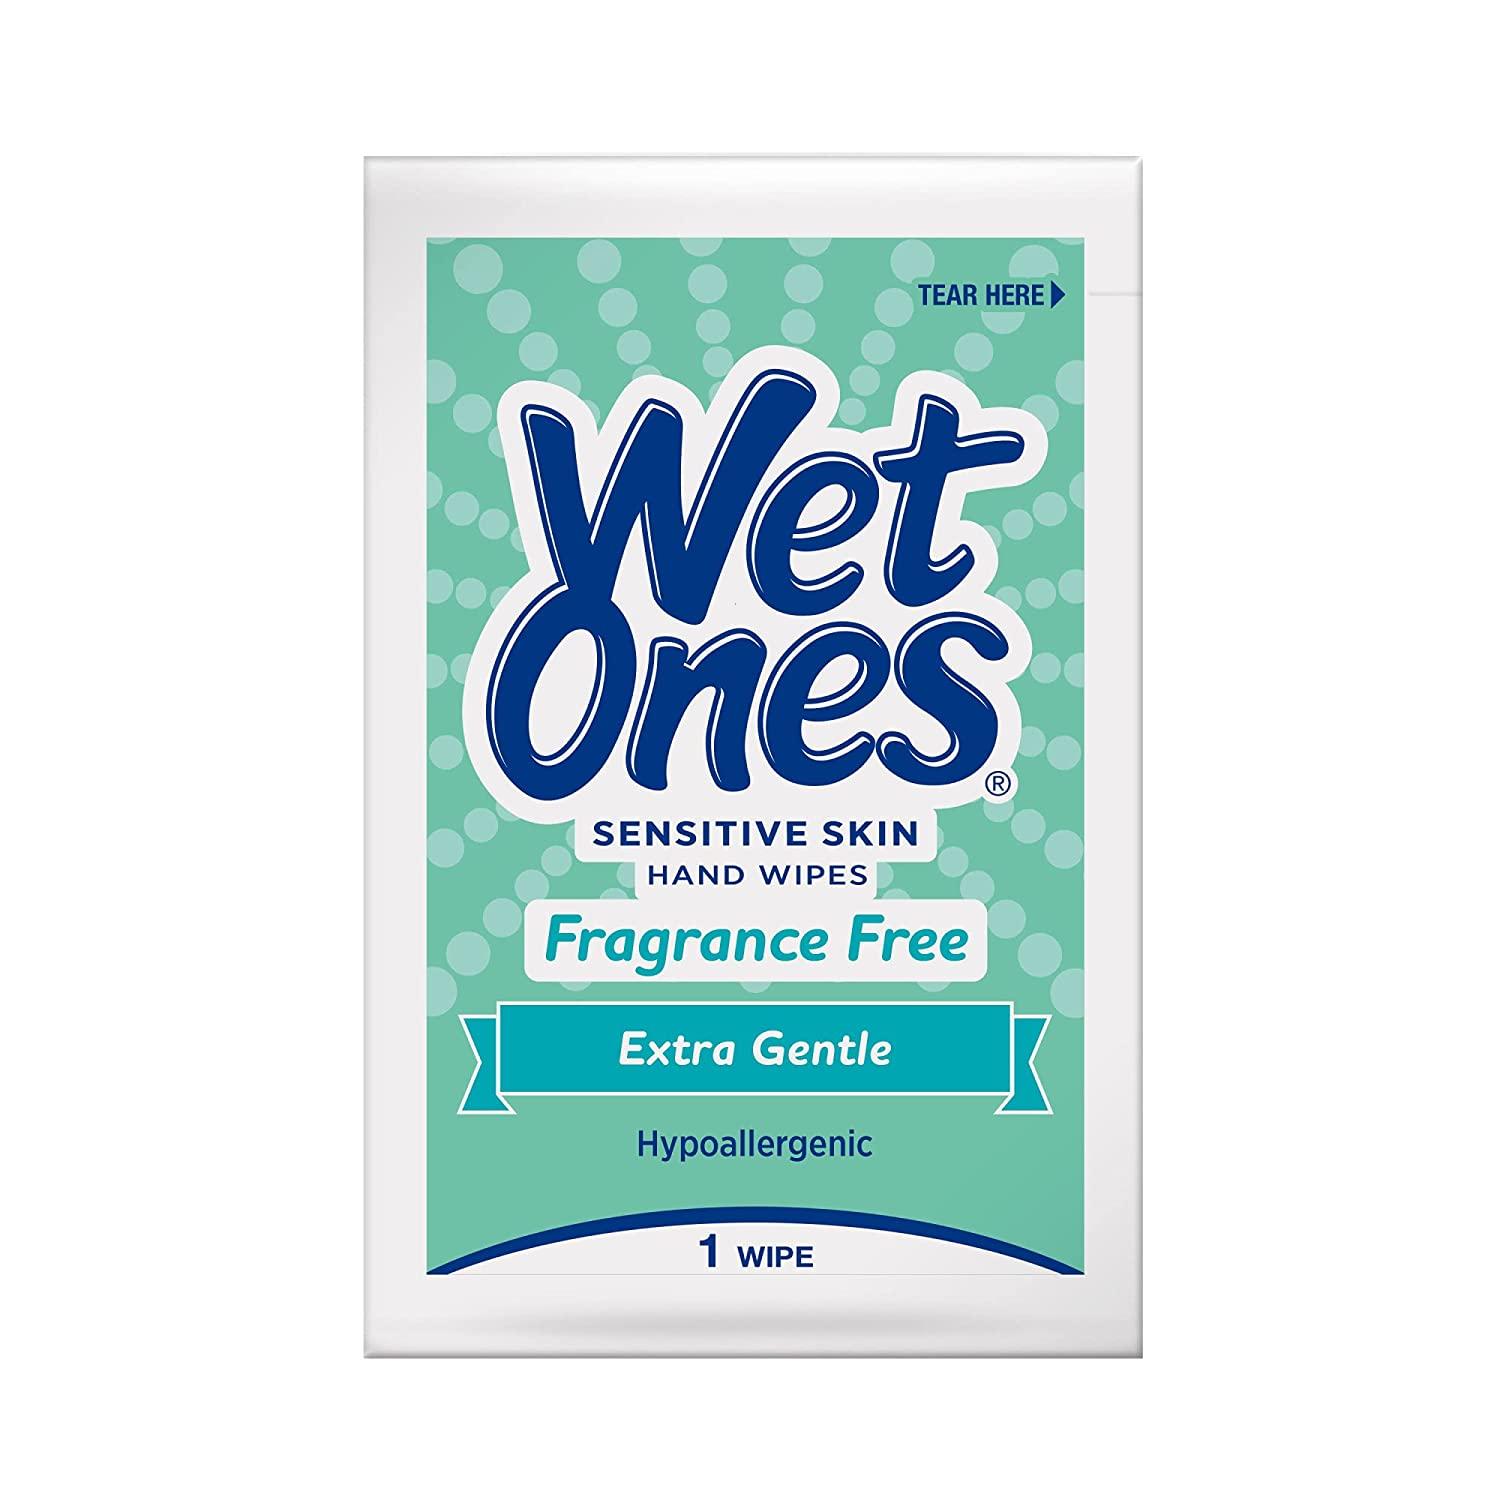 Wet Ones Wipes, Hands & Face, Sensitive Skin, Fragrance Free